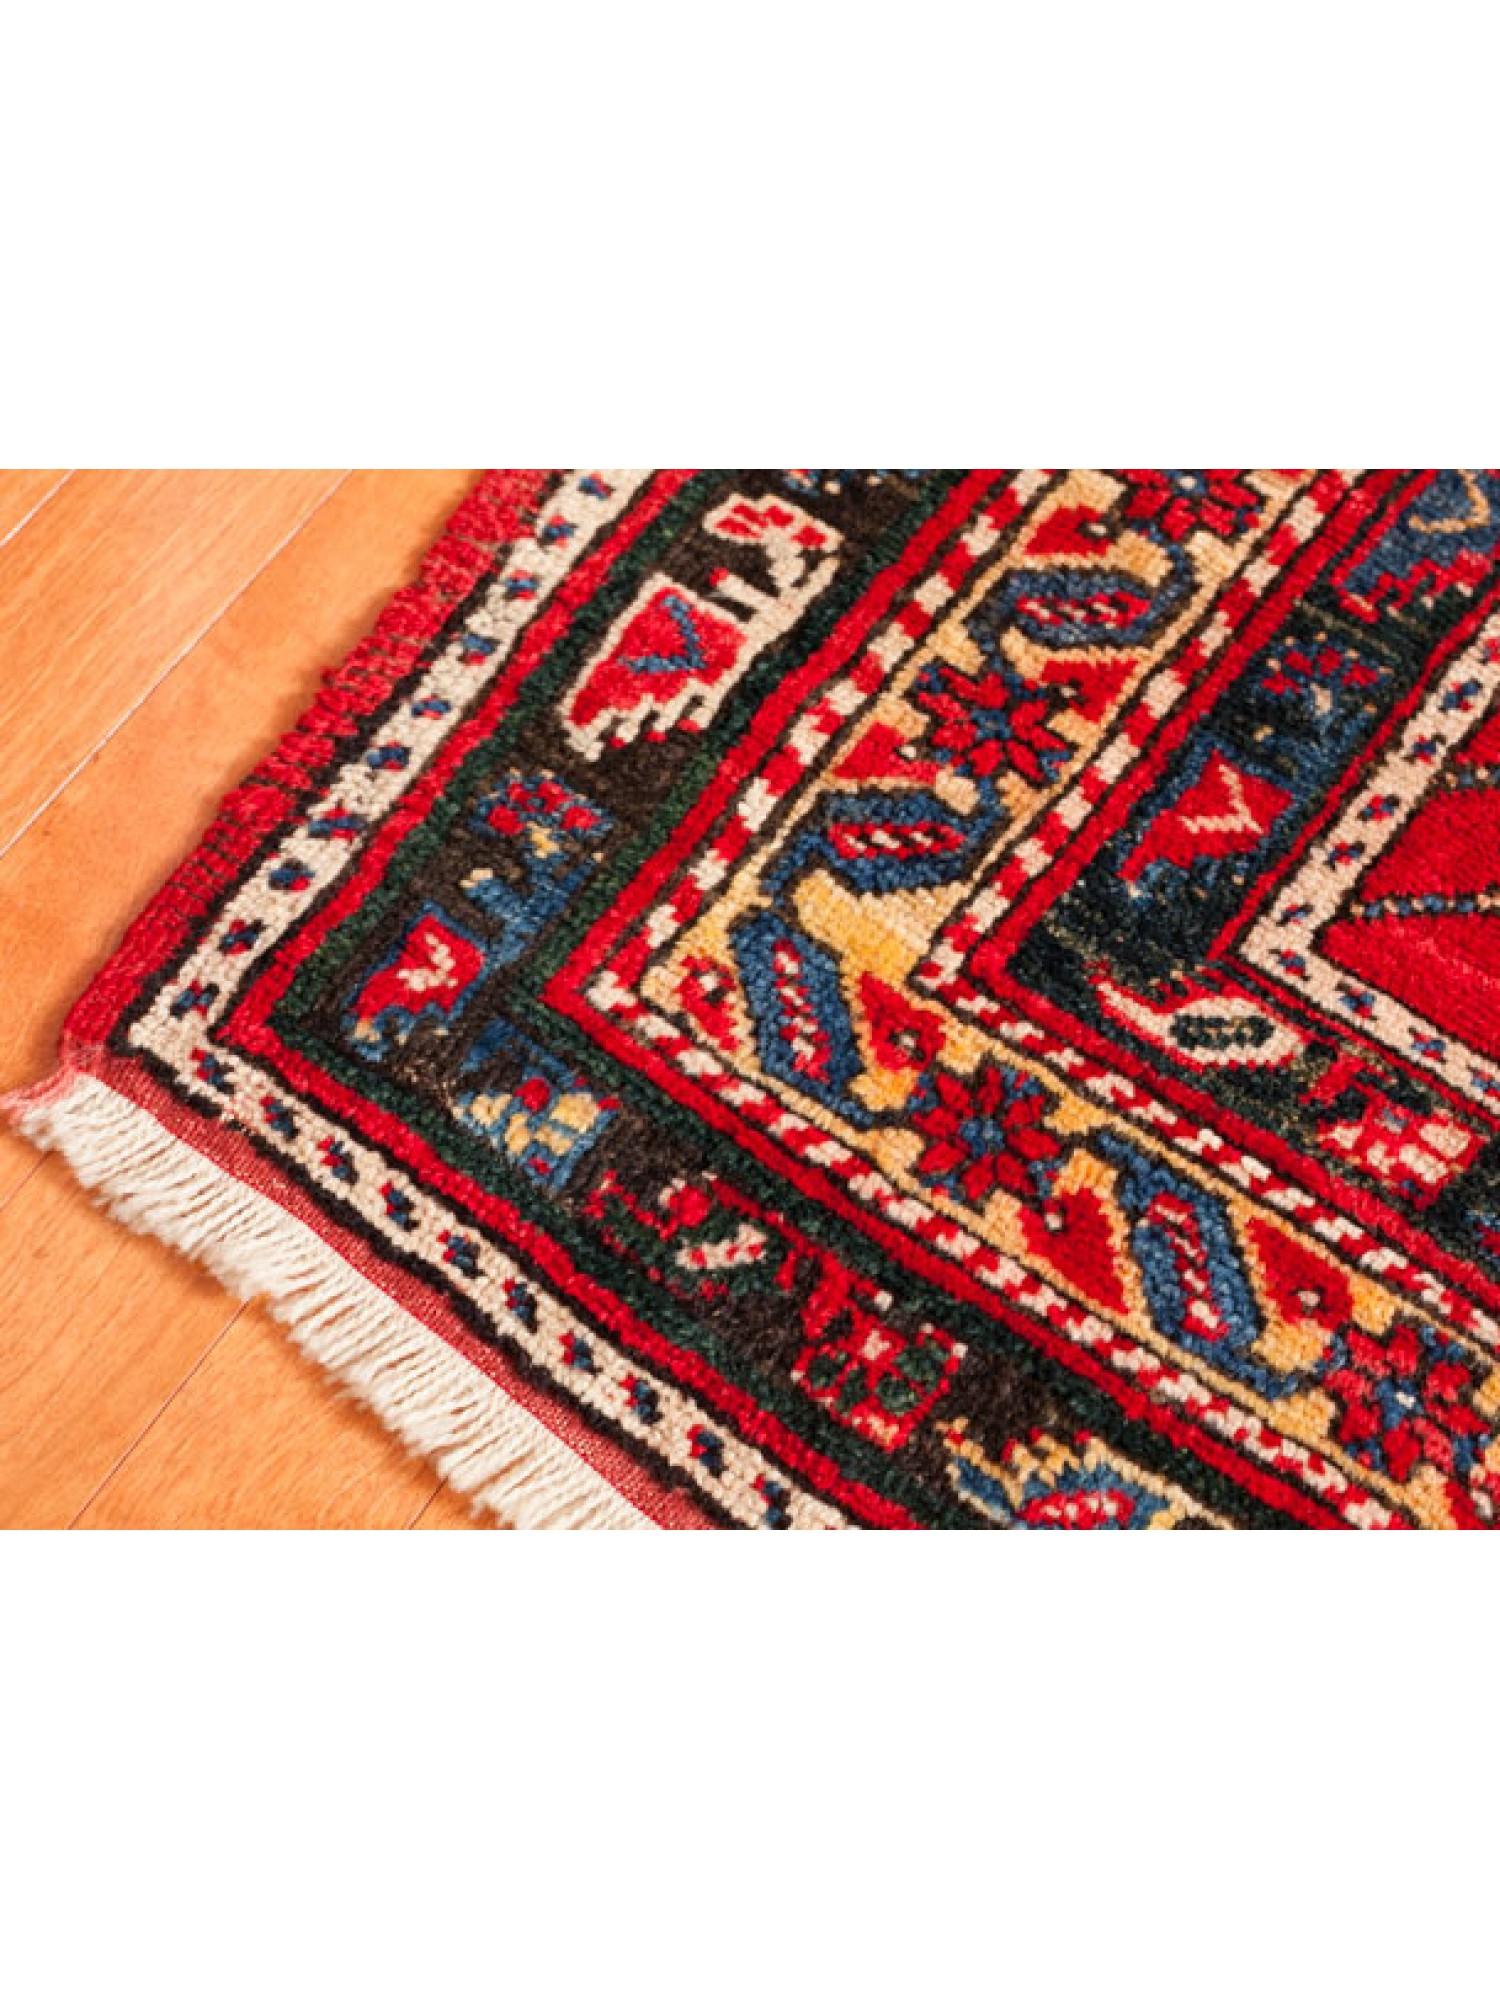 Vegetable Dyed Antique Ghiordes Prayer Rug Western Anatolian Turkish Mihrab Carpet Rare Design For Sale